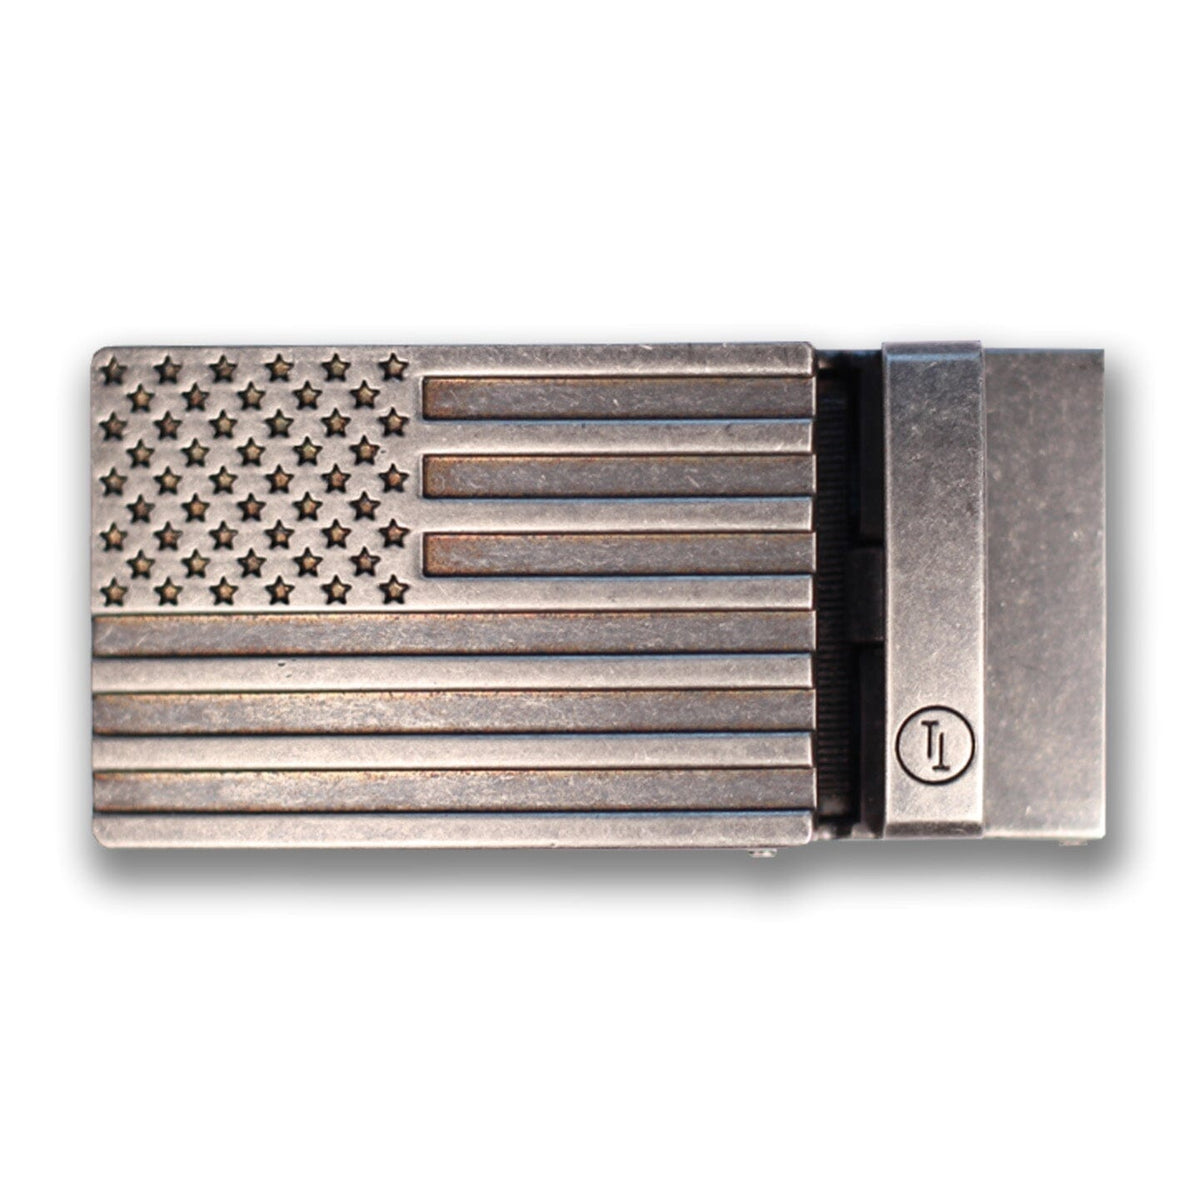 American Flag Buckle - Iron